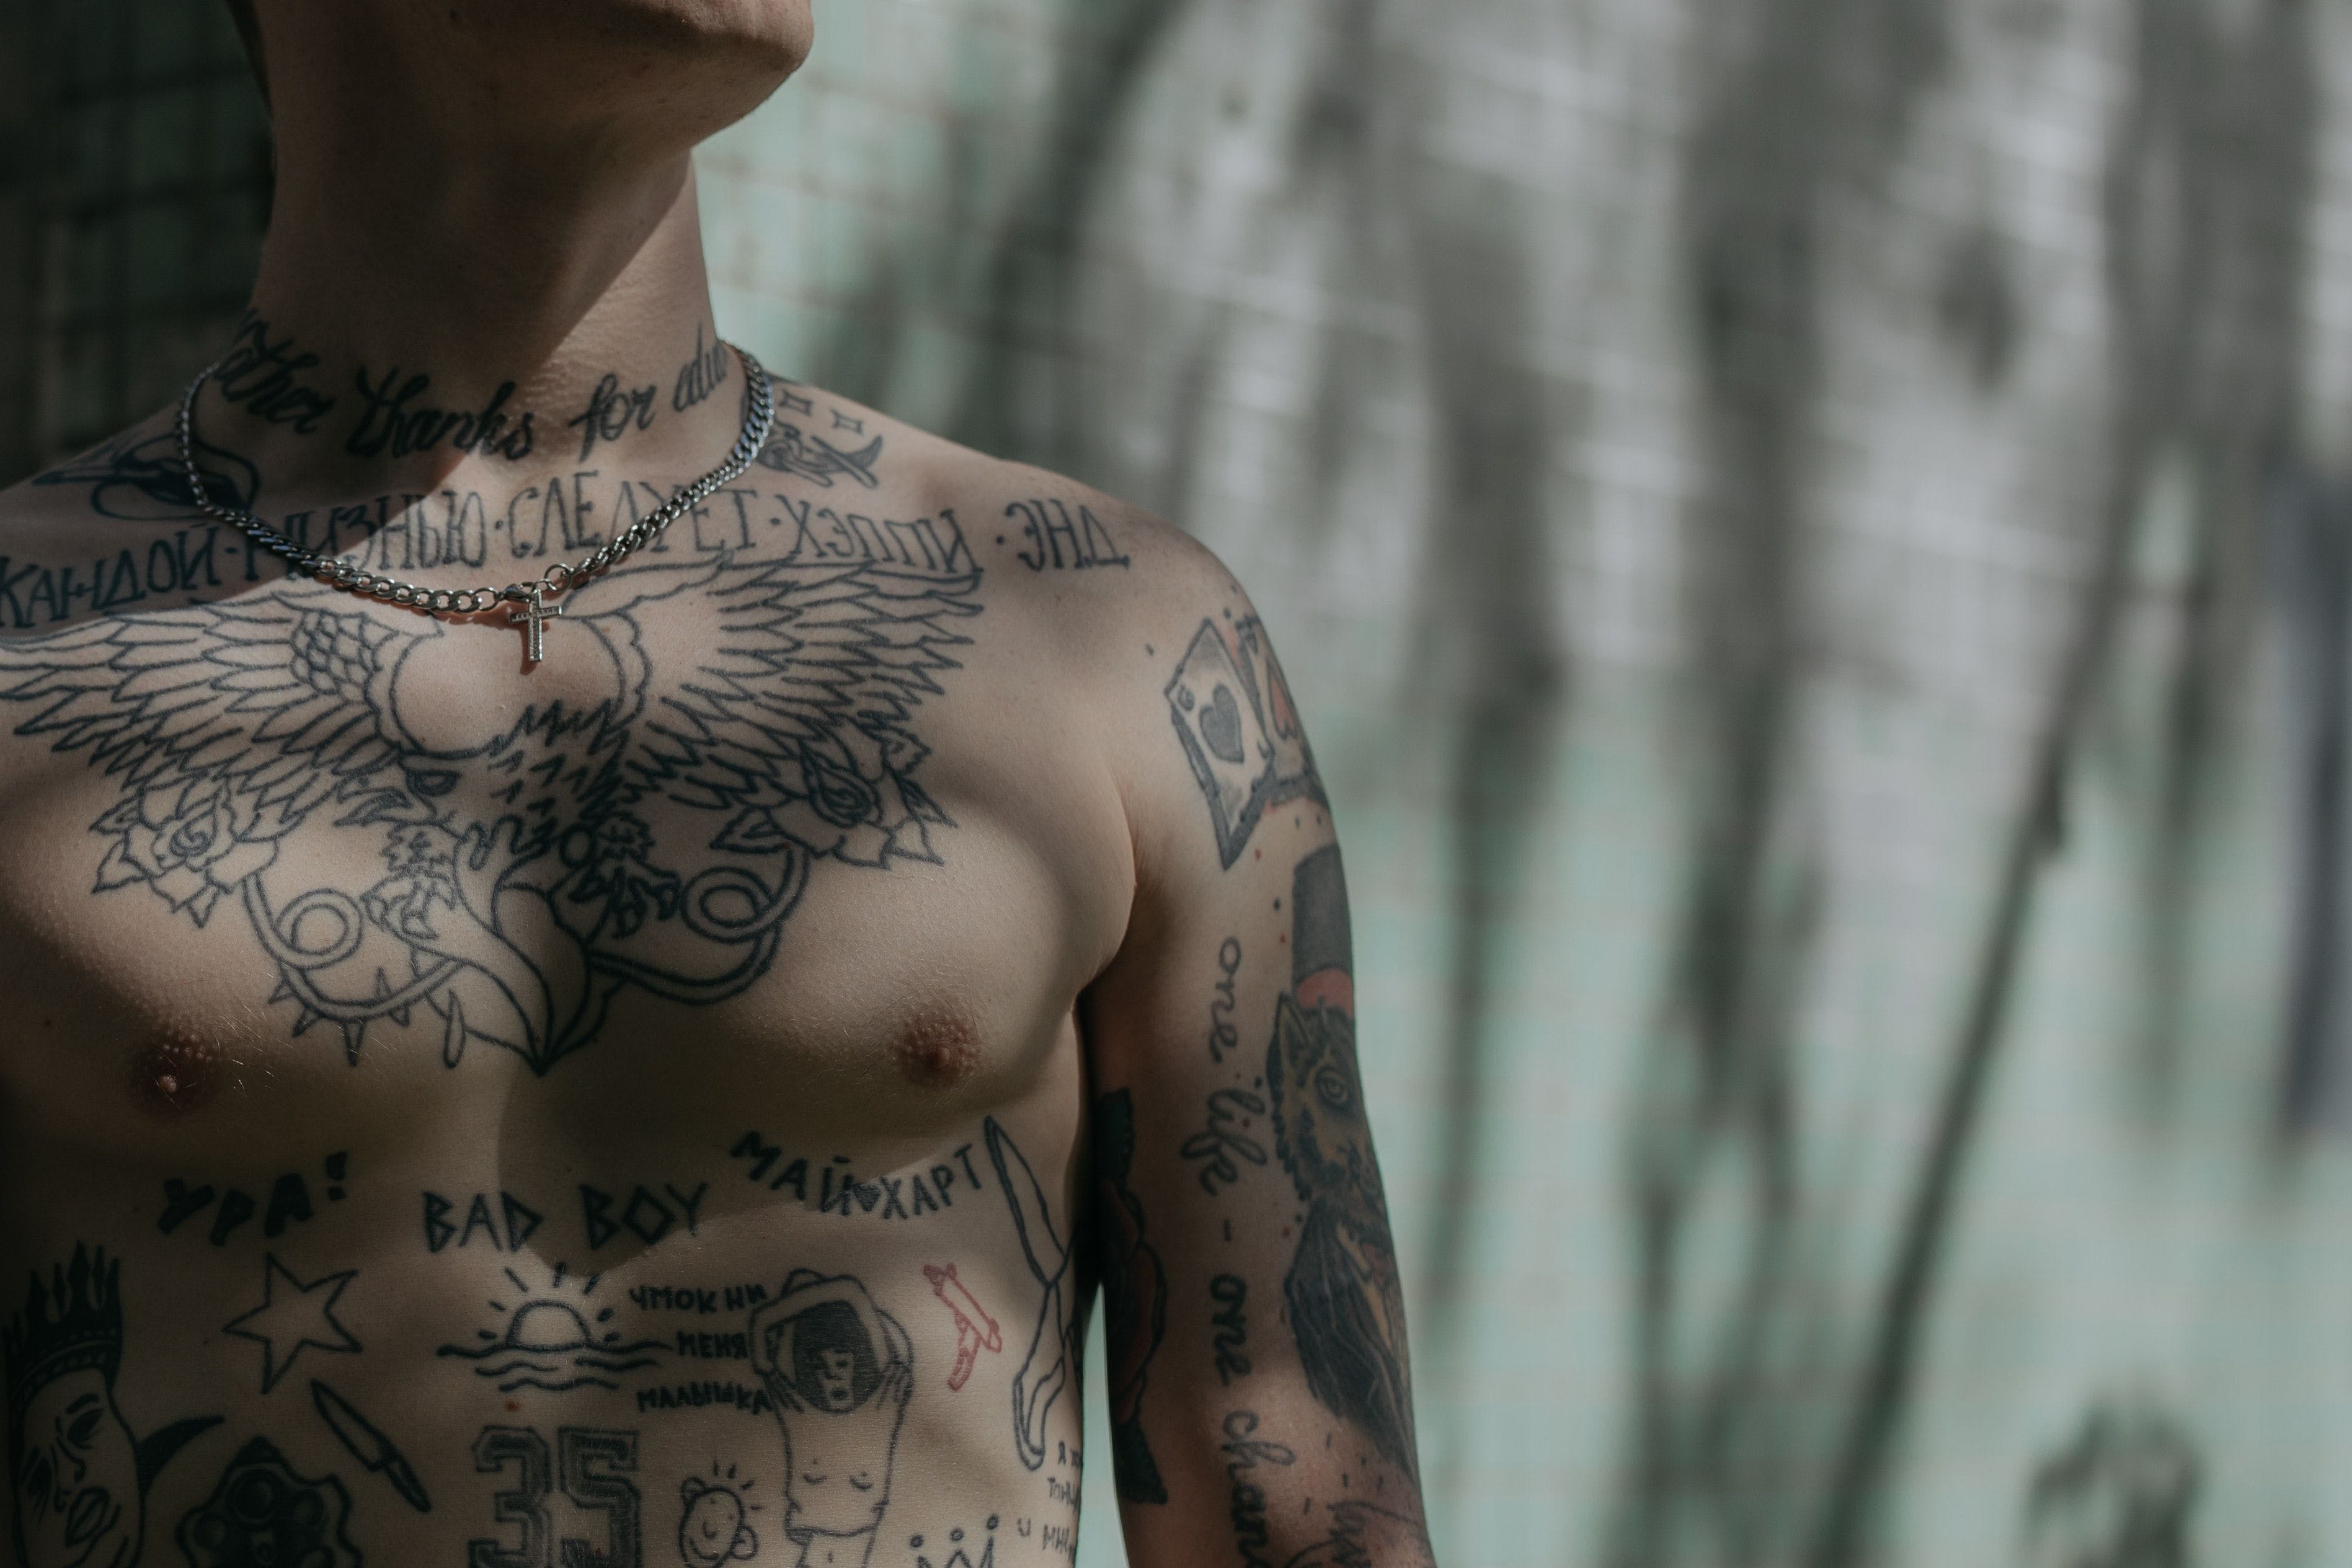 Tattooing 101-Tattoo Needle Depth 